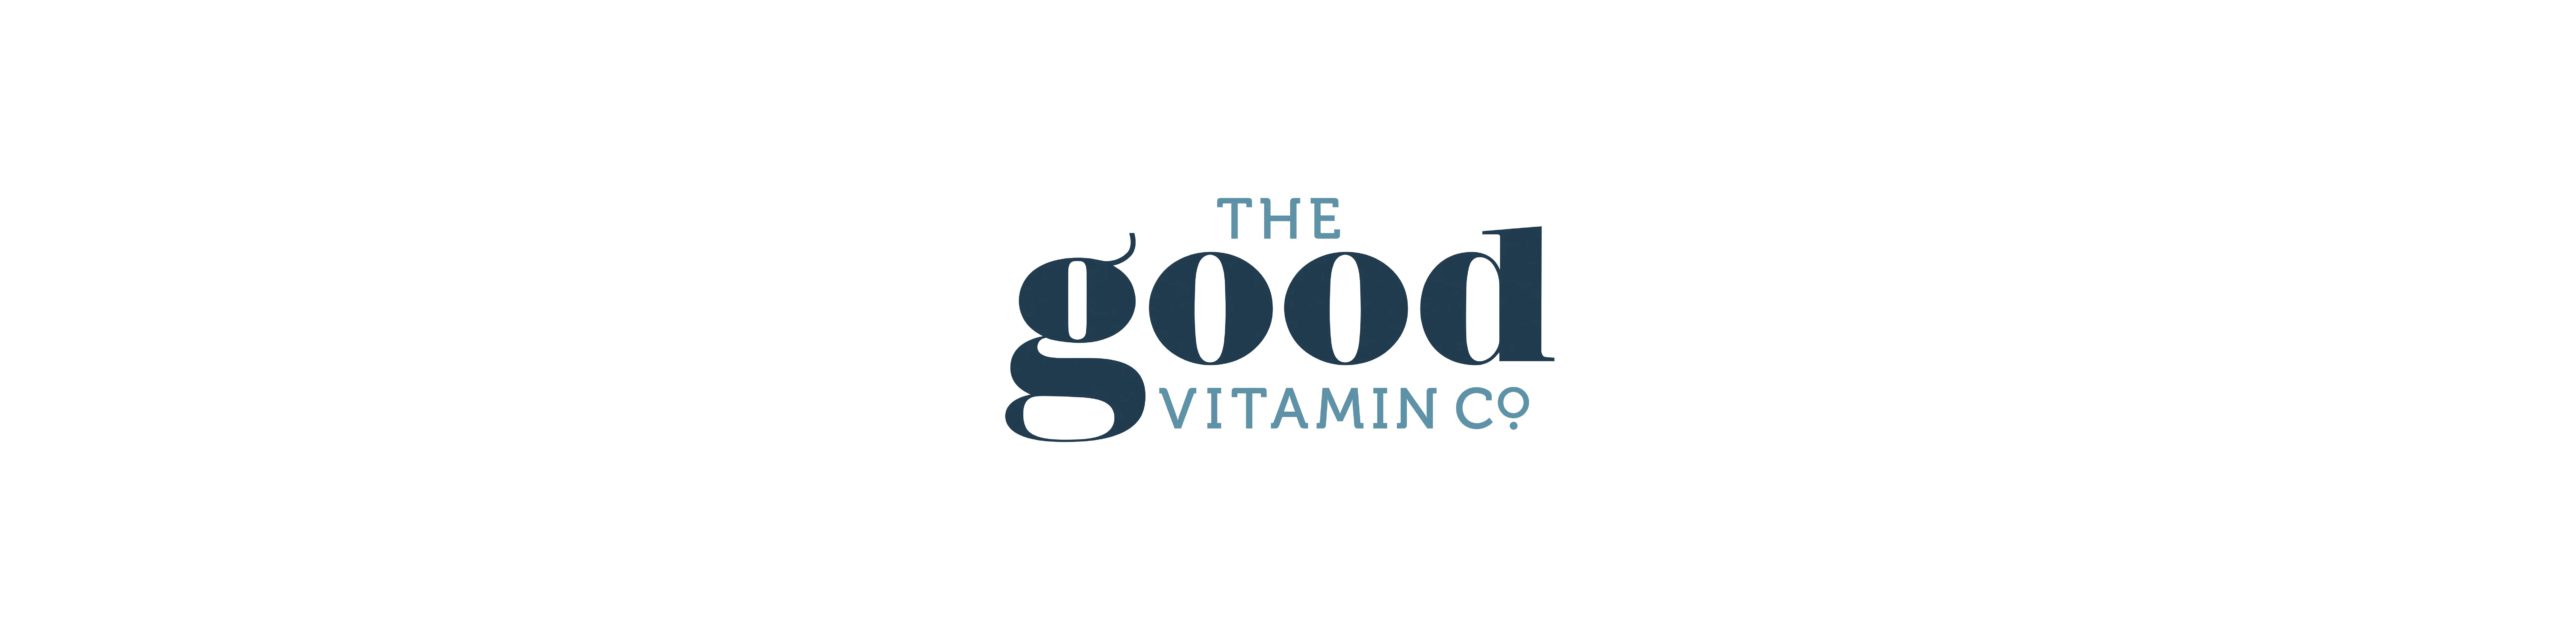 The Good Vitamin Co. Logo RGB 1 scaled Chalk n Cheese Digital April 4, 2021